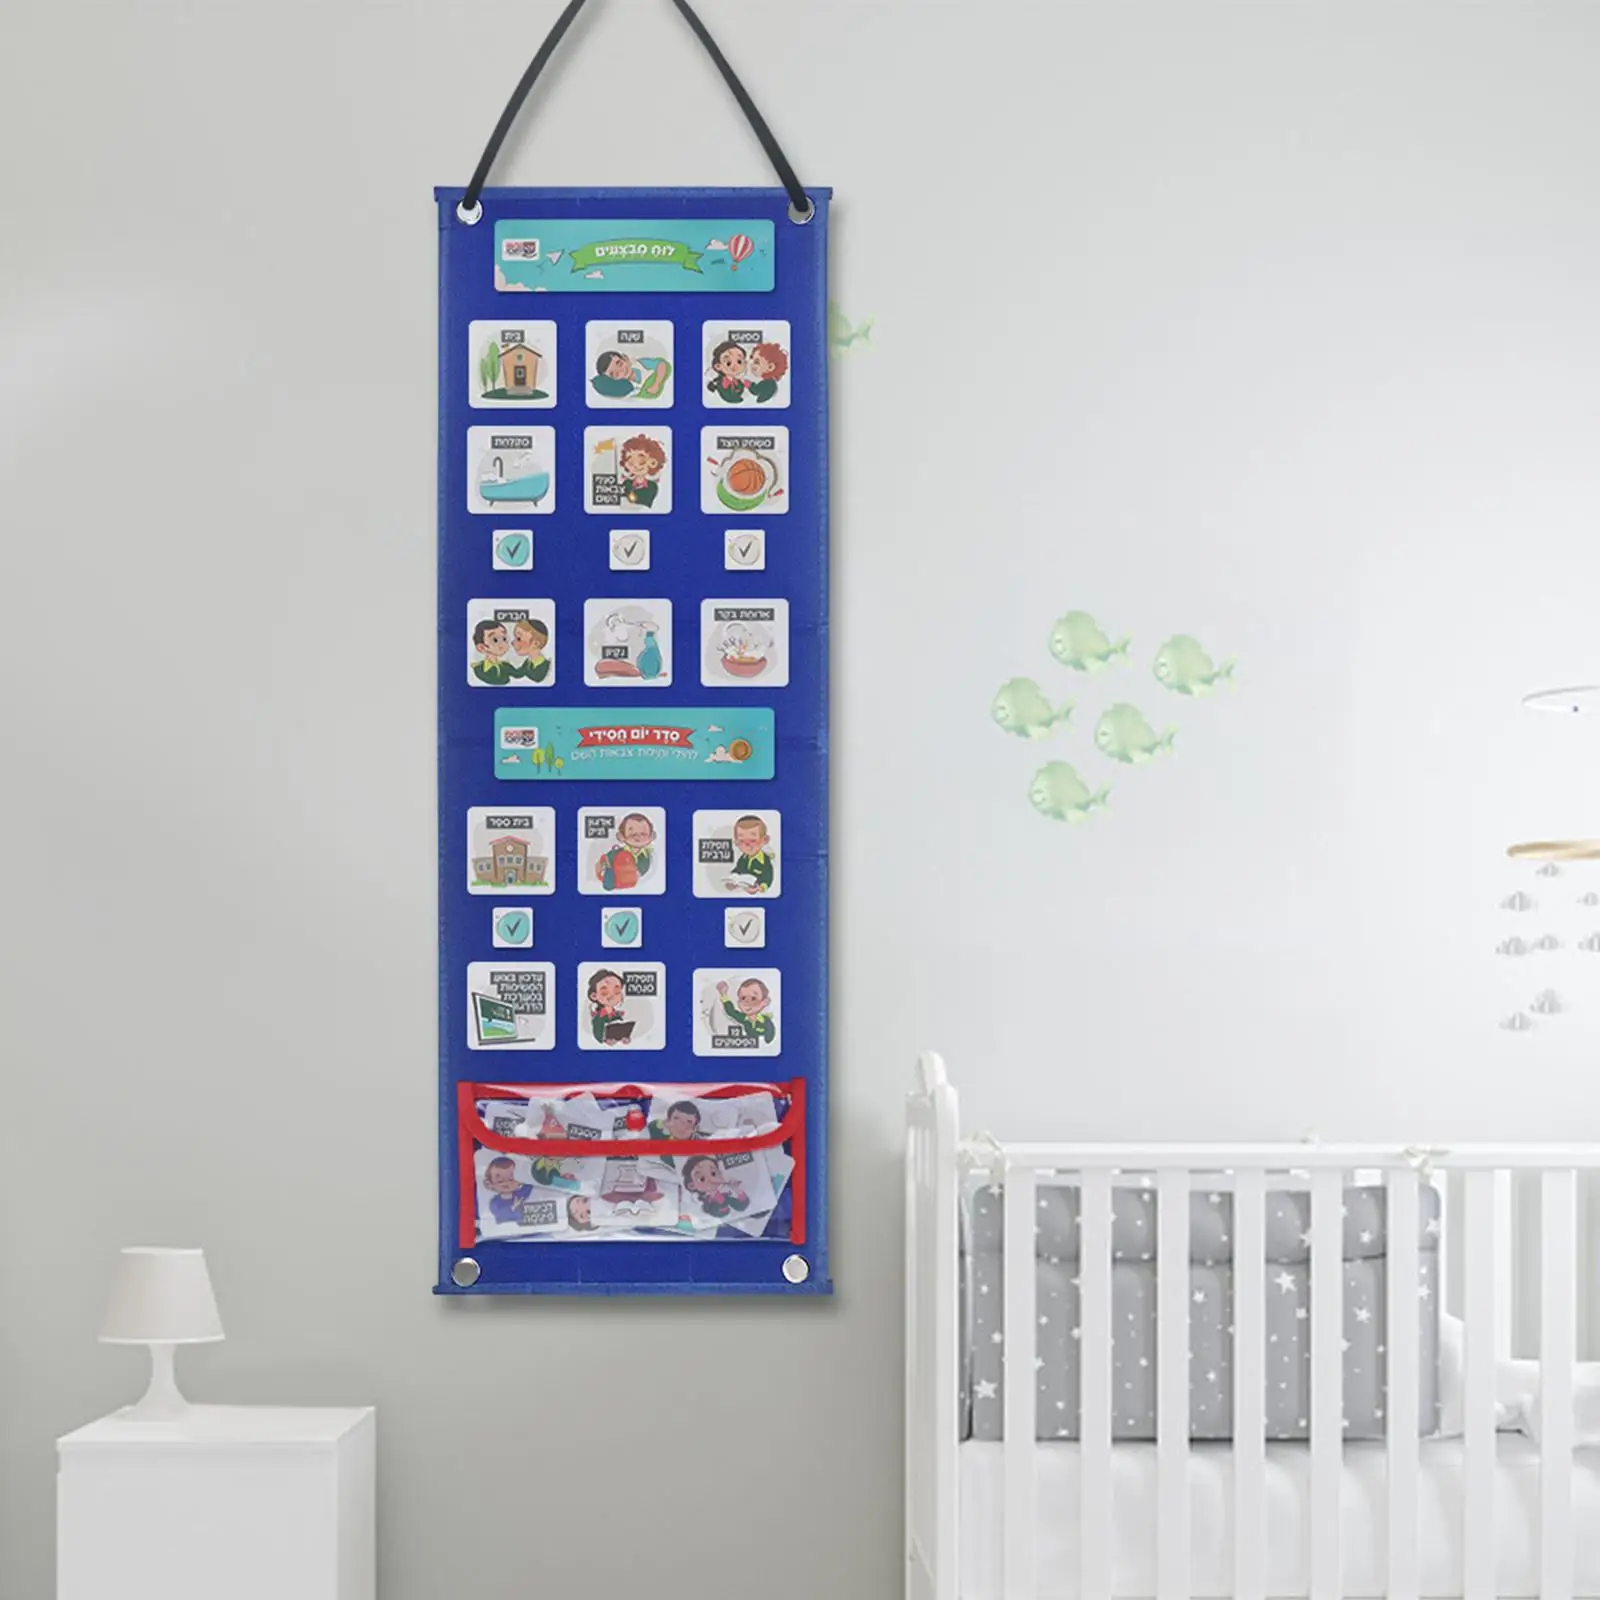 Daily Schedule Board Chore Chart Israeli Visual Schedule Calendar for Interaction Preschool Self Discipline Responsibility Gifts